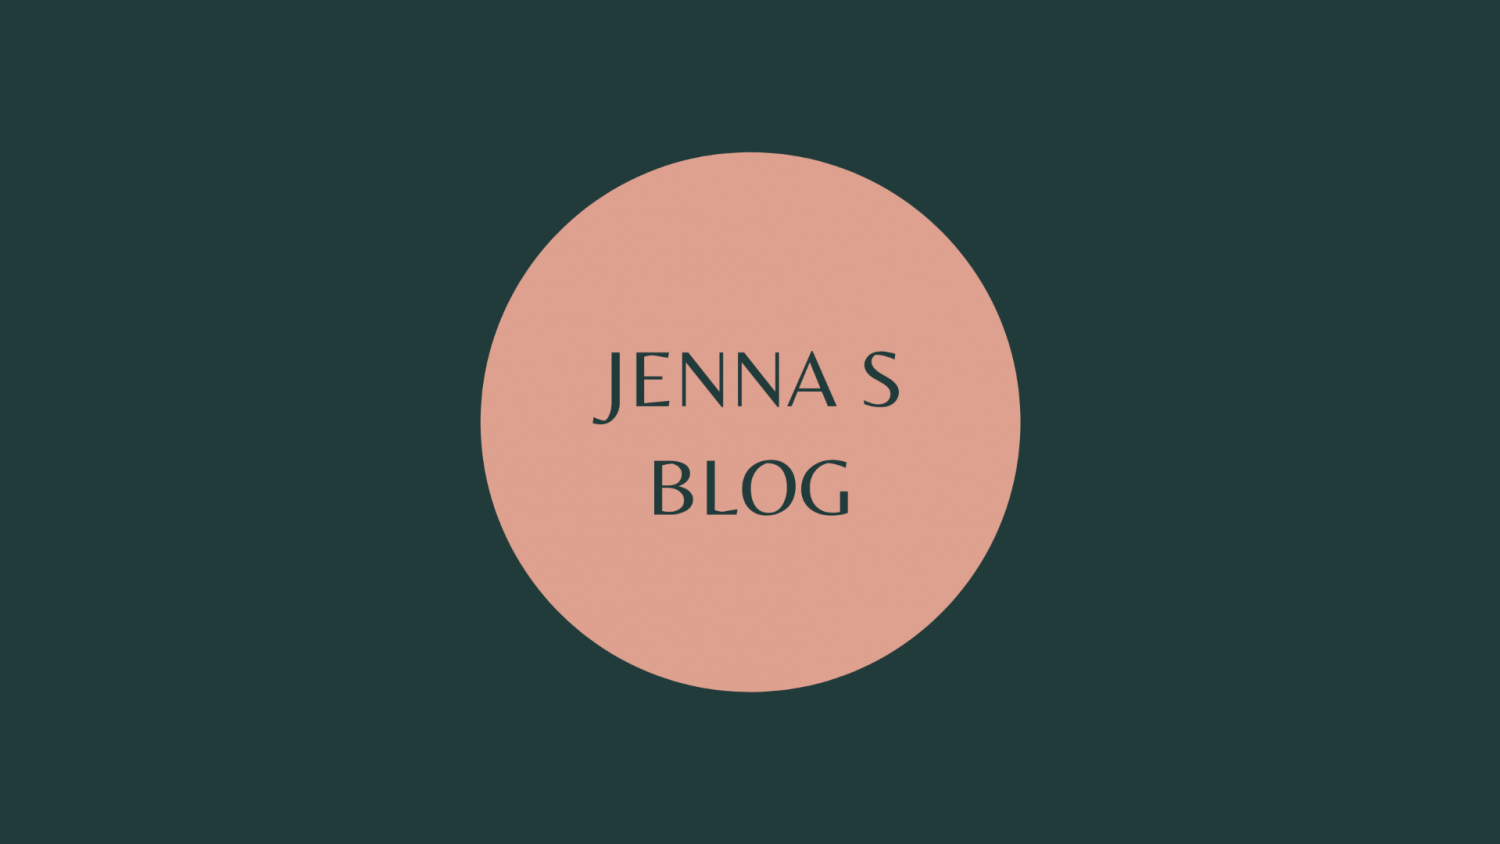 Jenna S blog